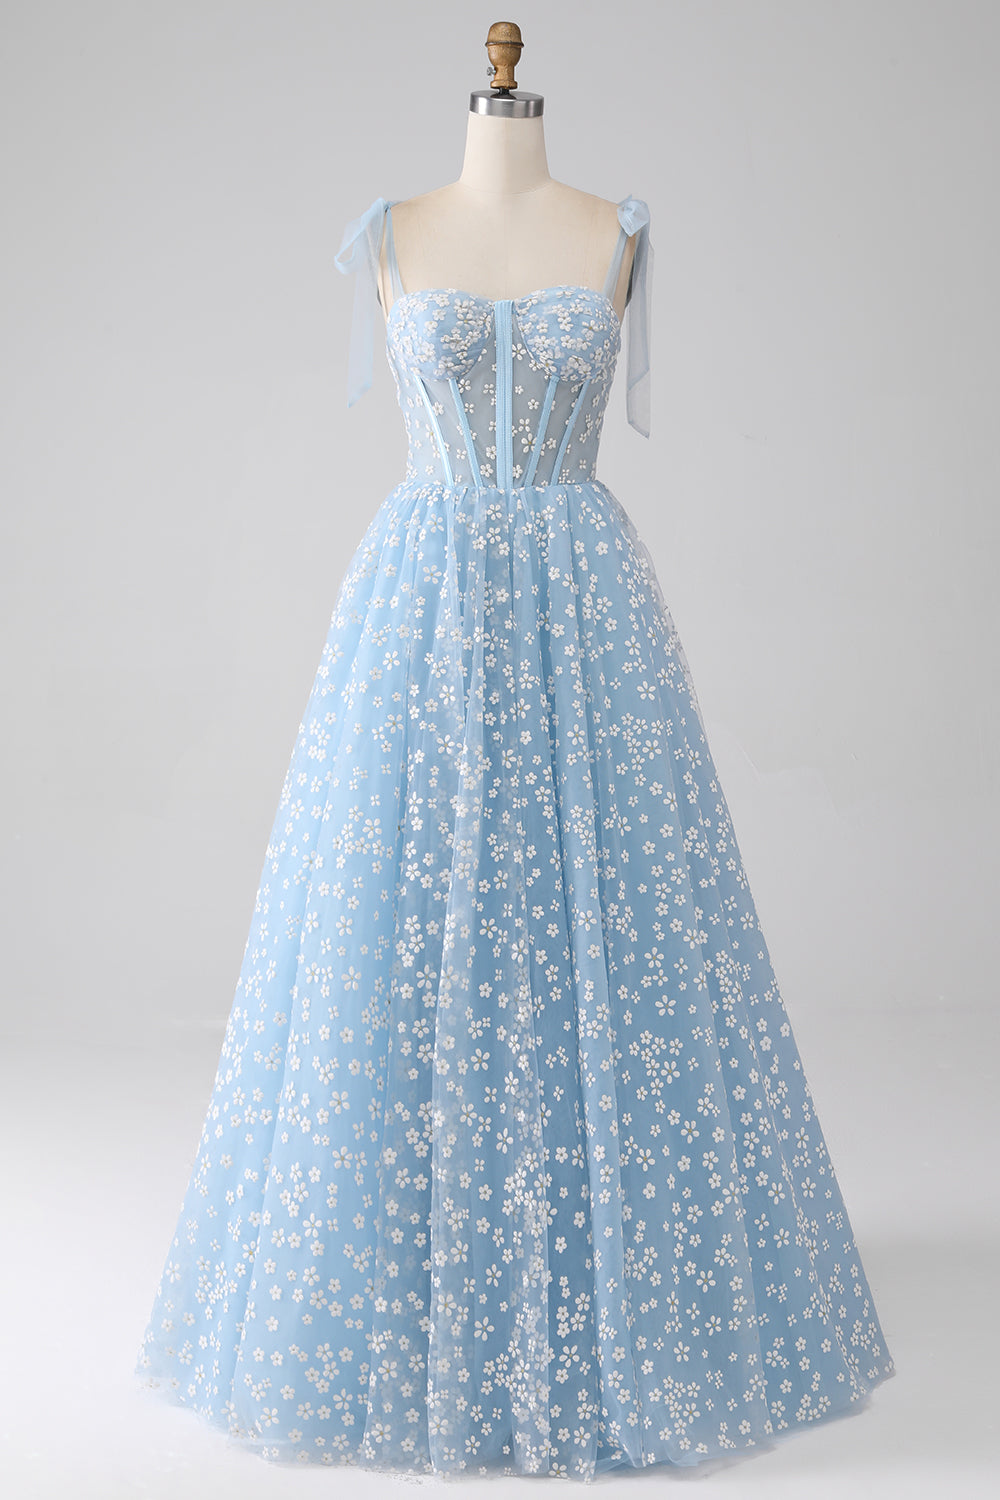 A-Line Spaghetti Straps Sky Blue Corset Prom Dress